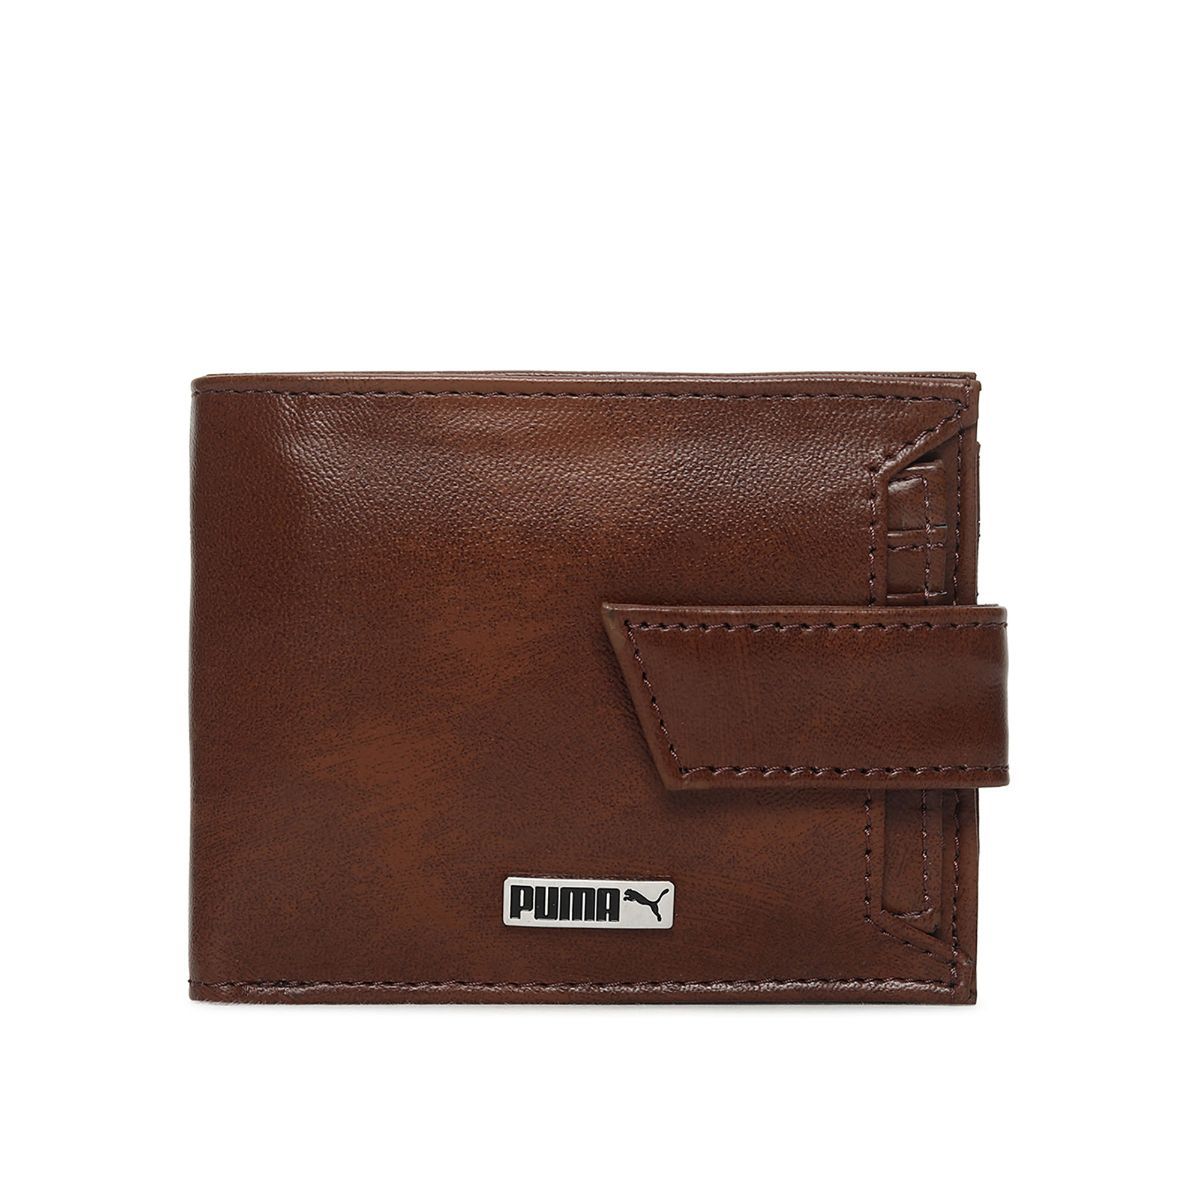 Stylish Brown Leather Puma Wallet